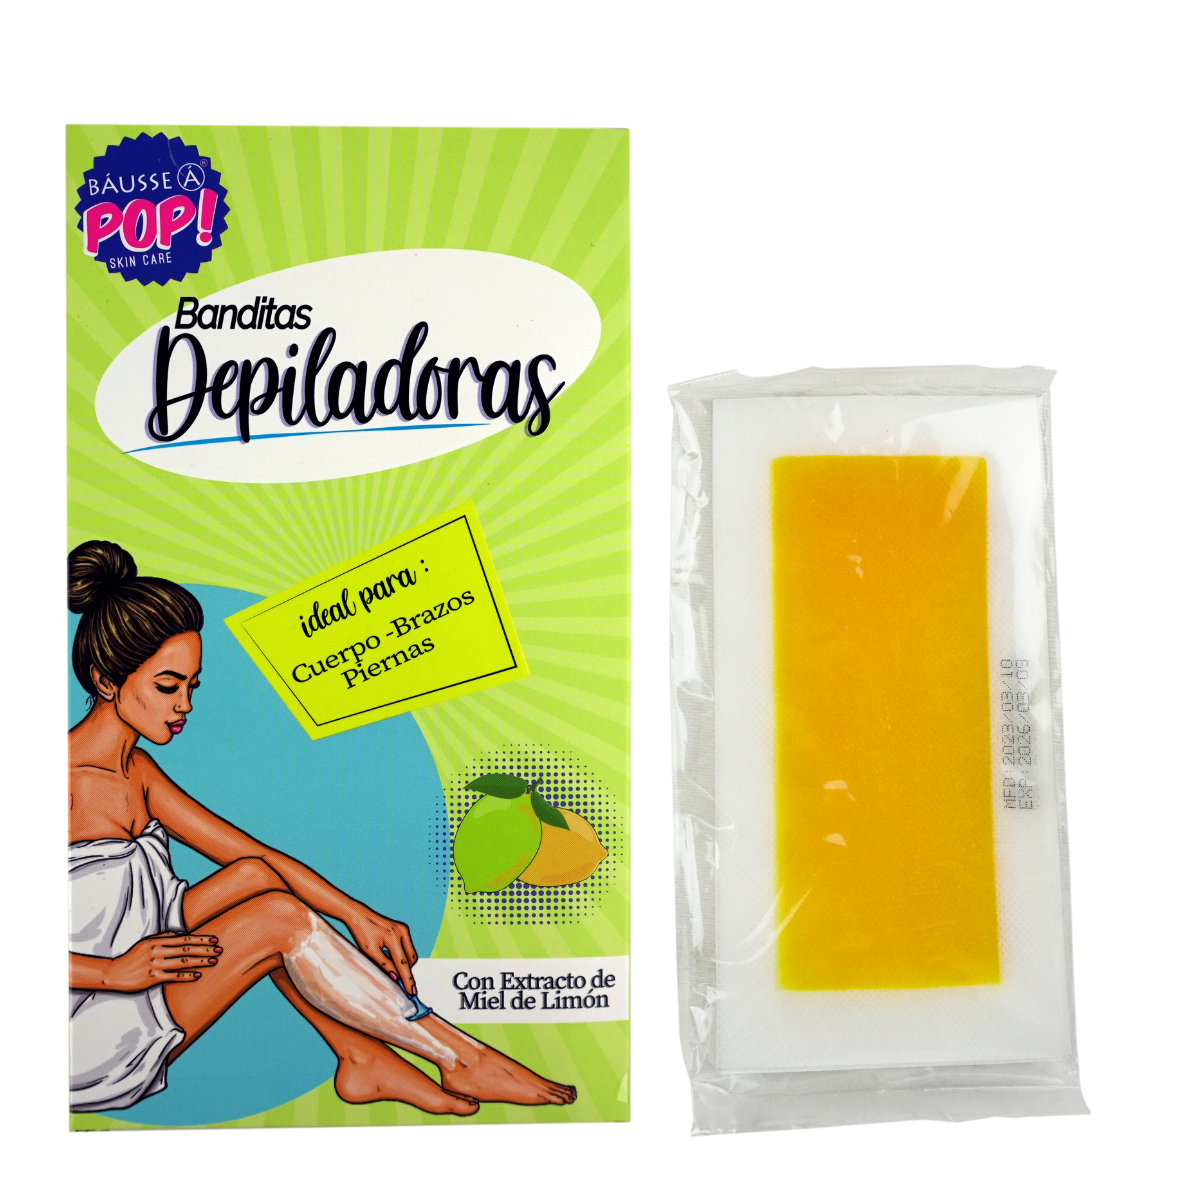 Banditas depiladoras con extracto de miel de limon BMM077